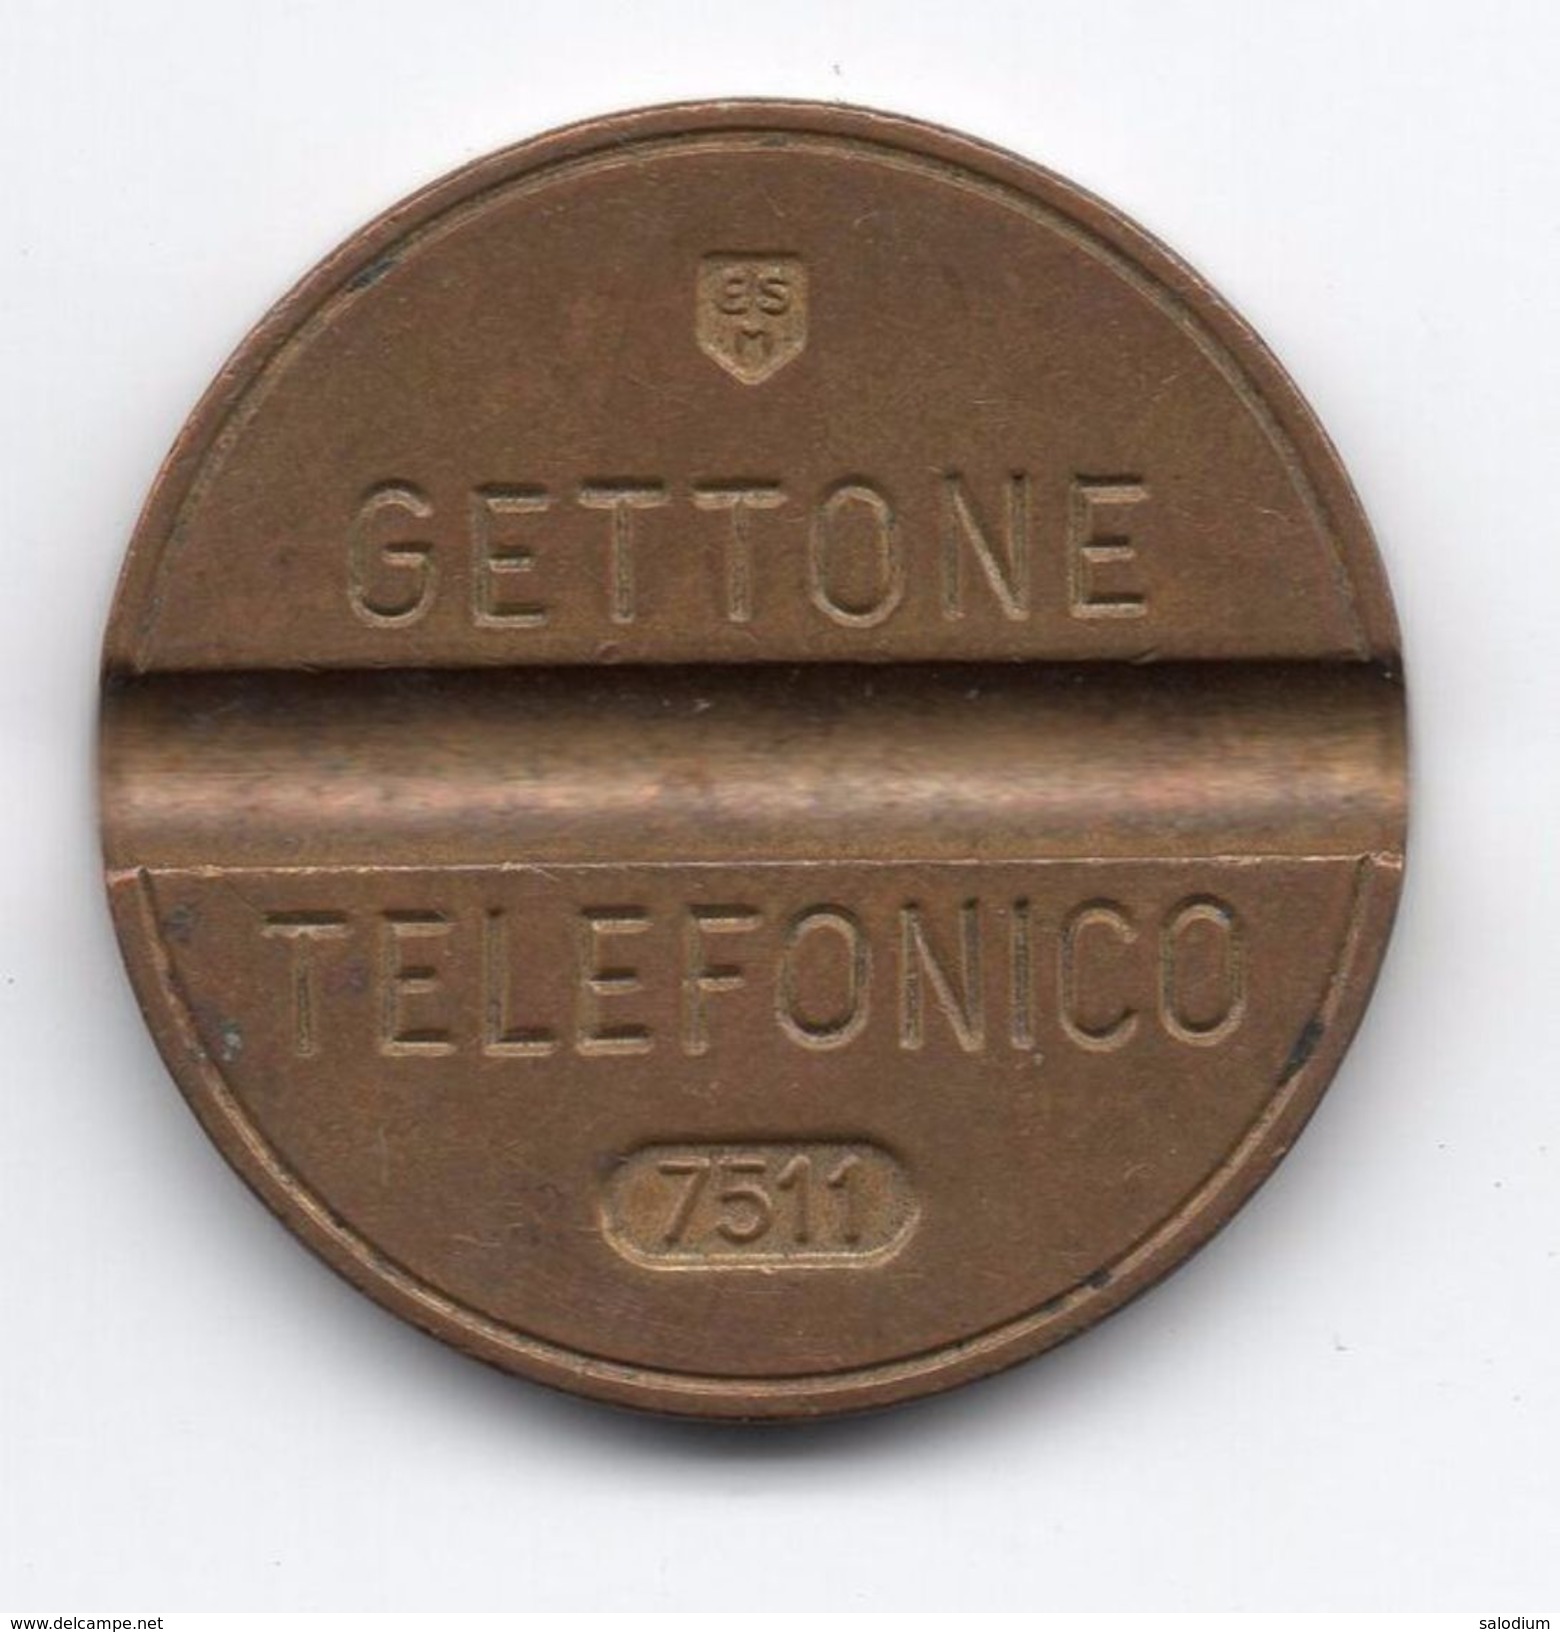 Gettone Telefonico 7511 Token Telephone - (Id-814) - Firma's